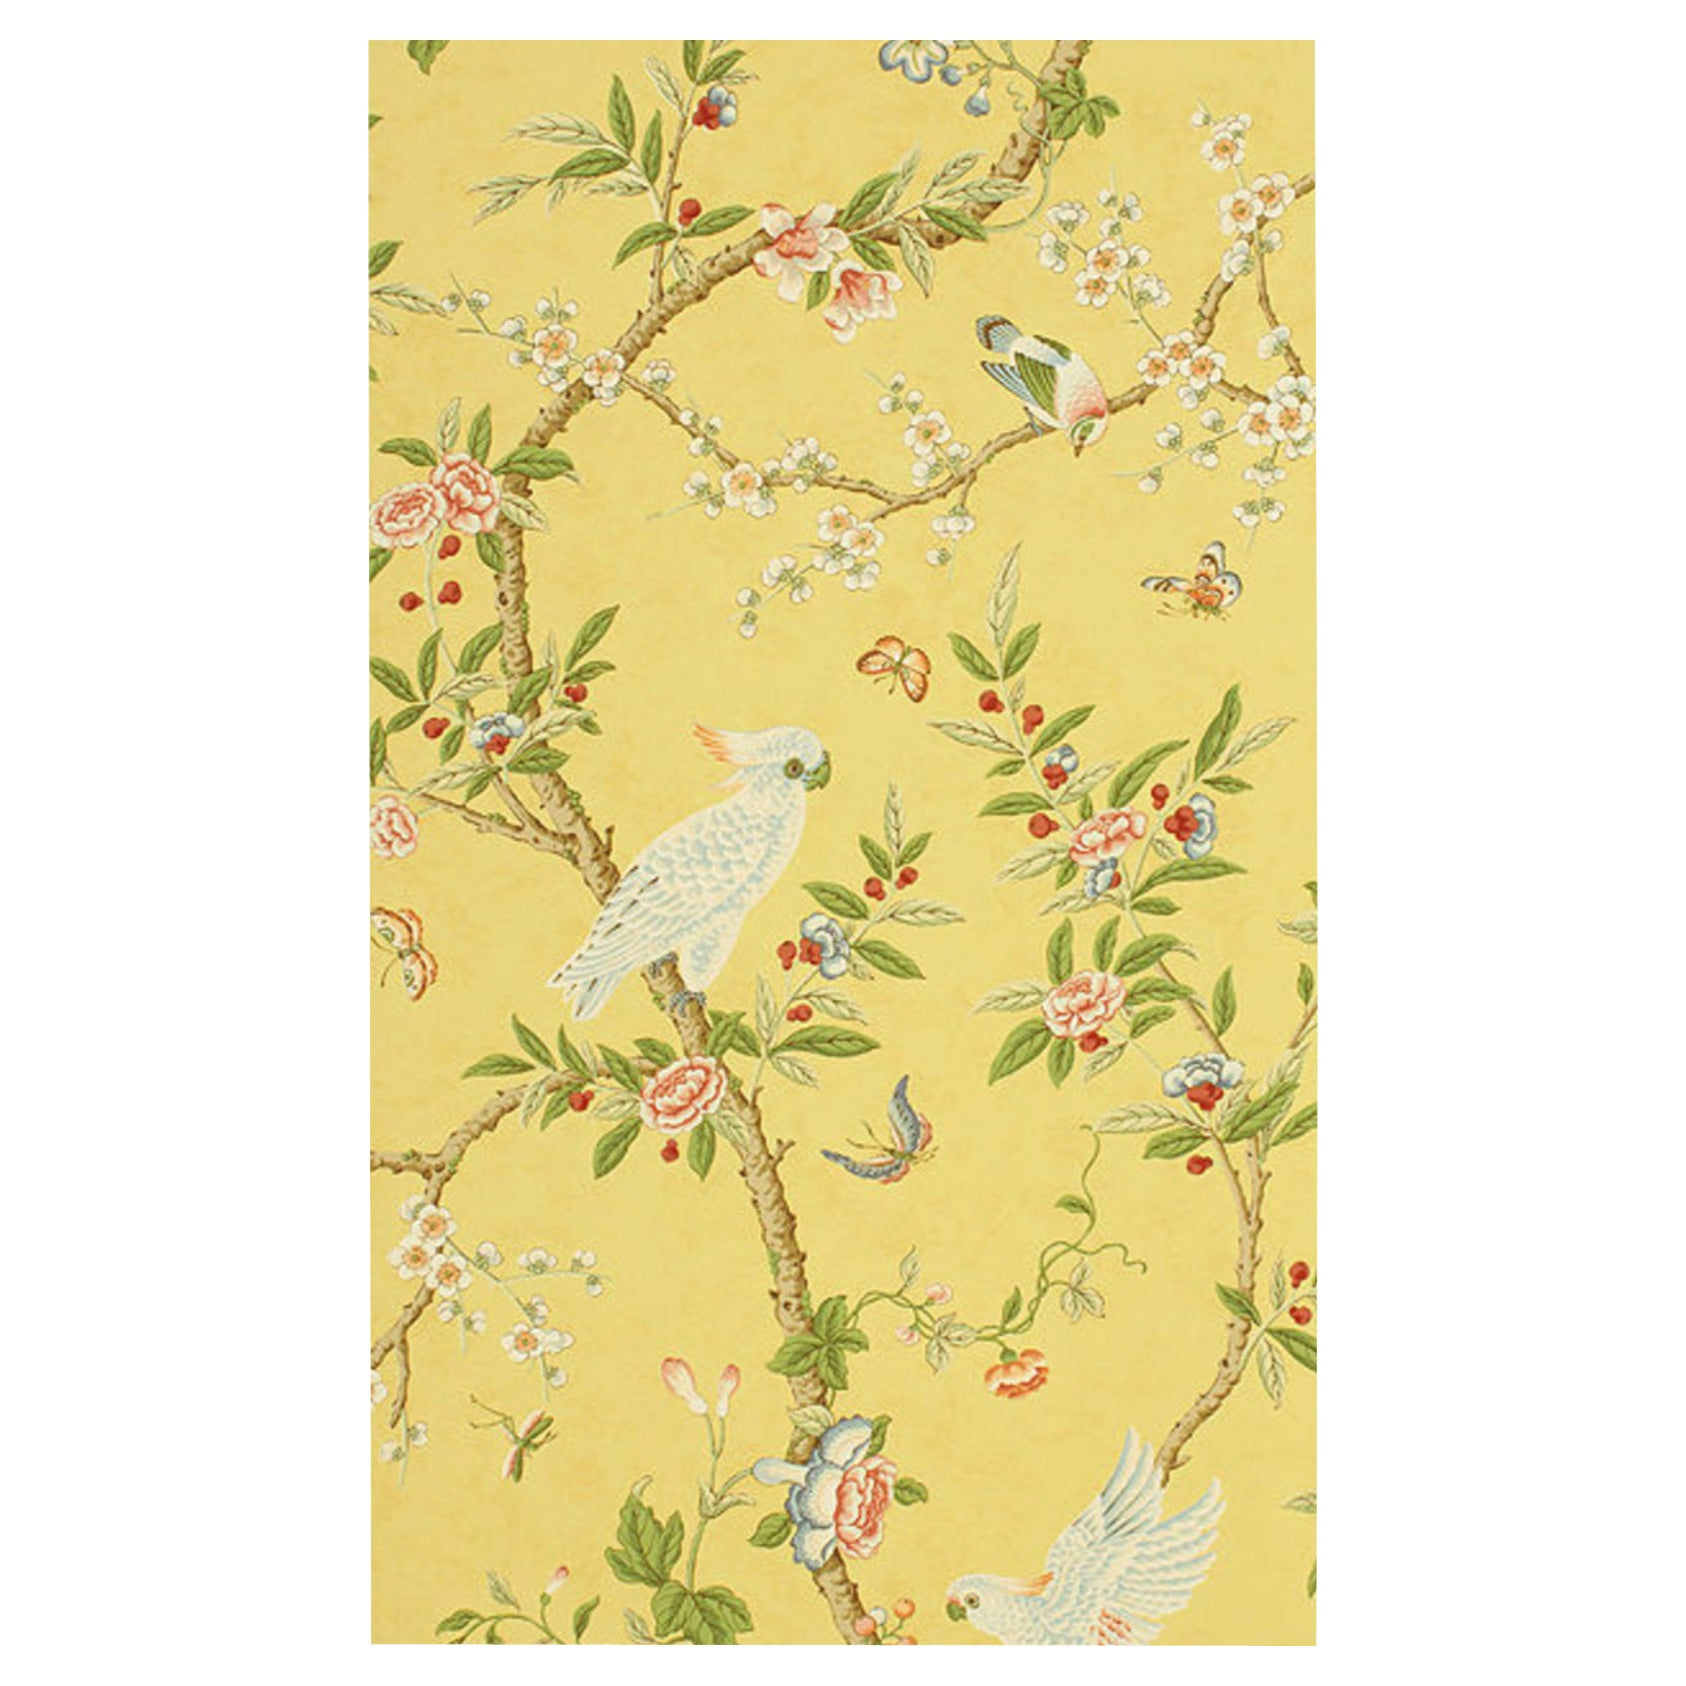 Brunschwig & Fils Hand-Printed Yellow Kanchou Mimosa Wallpaper Double Roll 2002